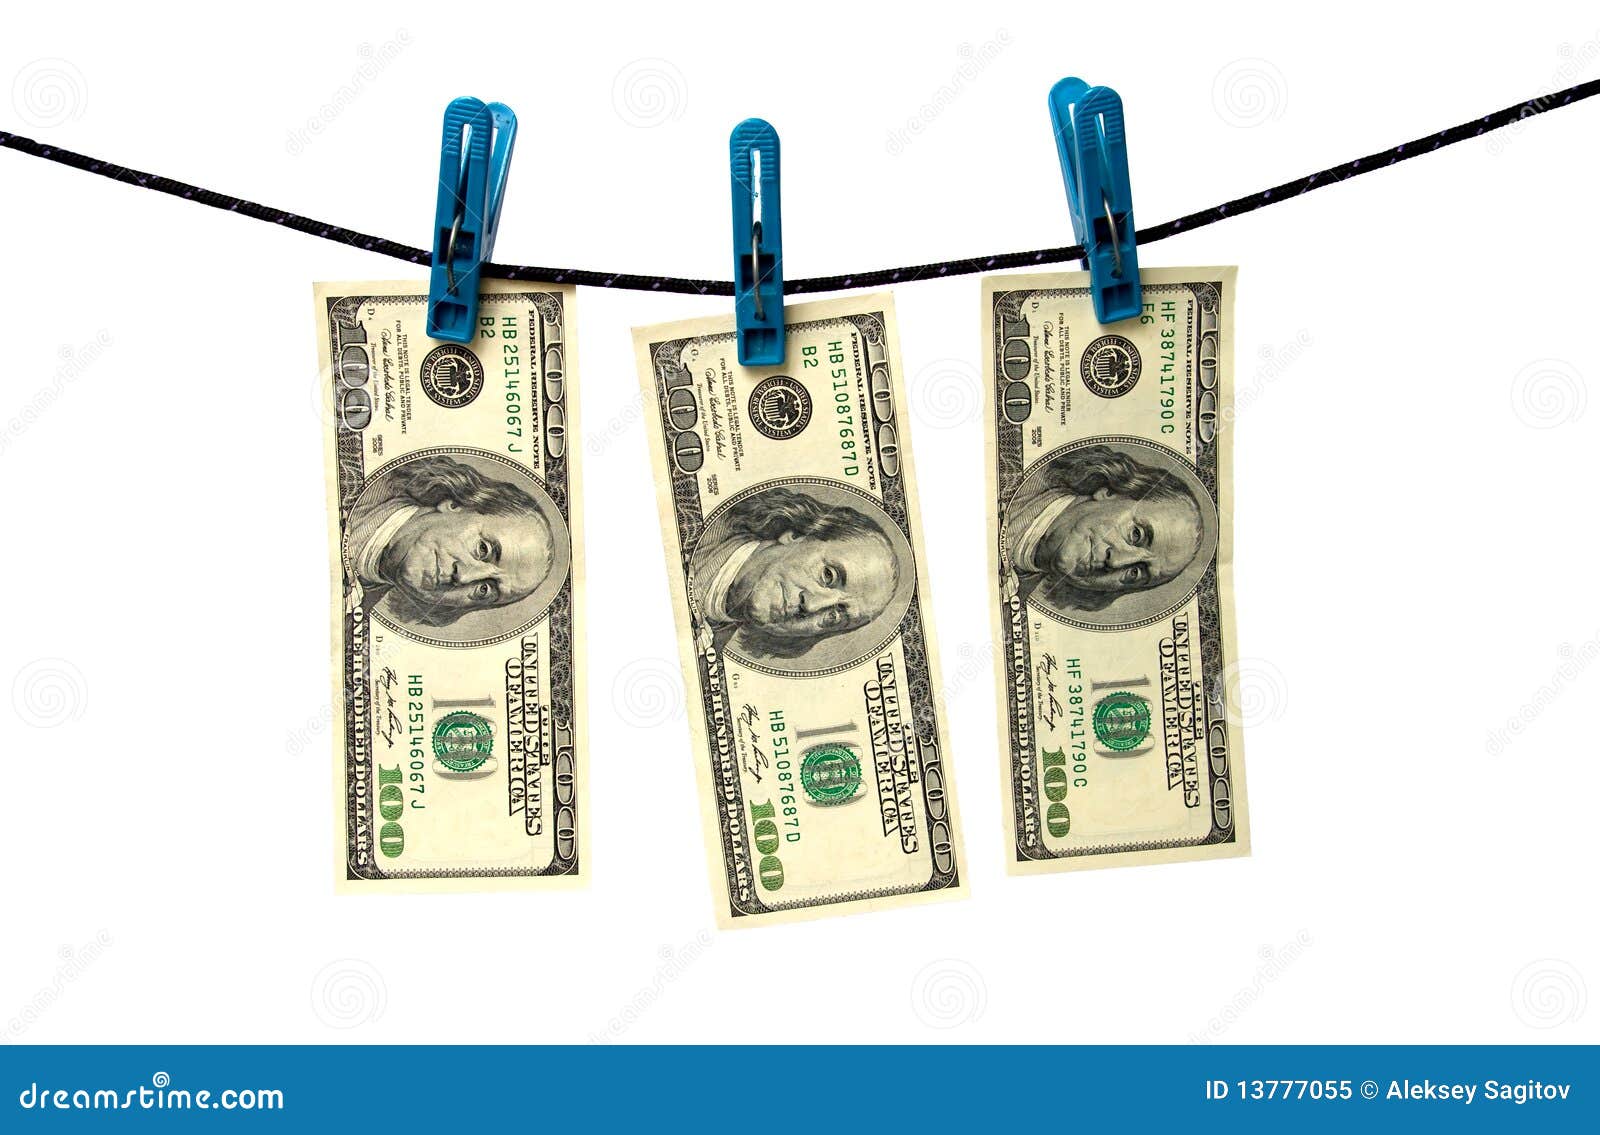 money laundering clip art - photo #39